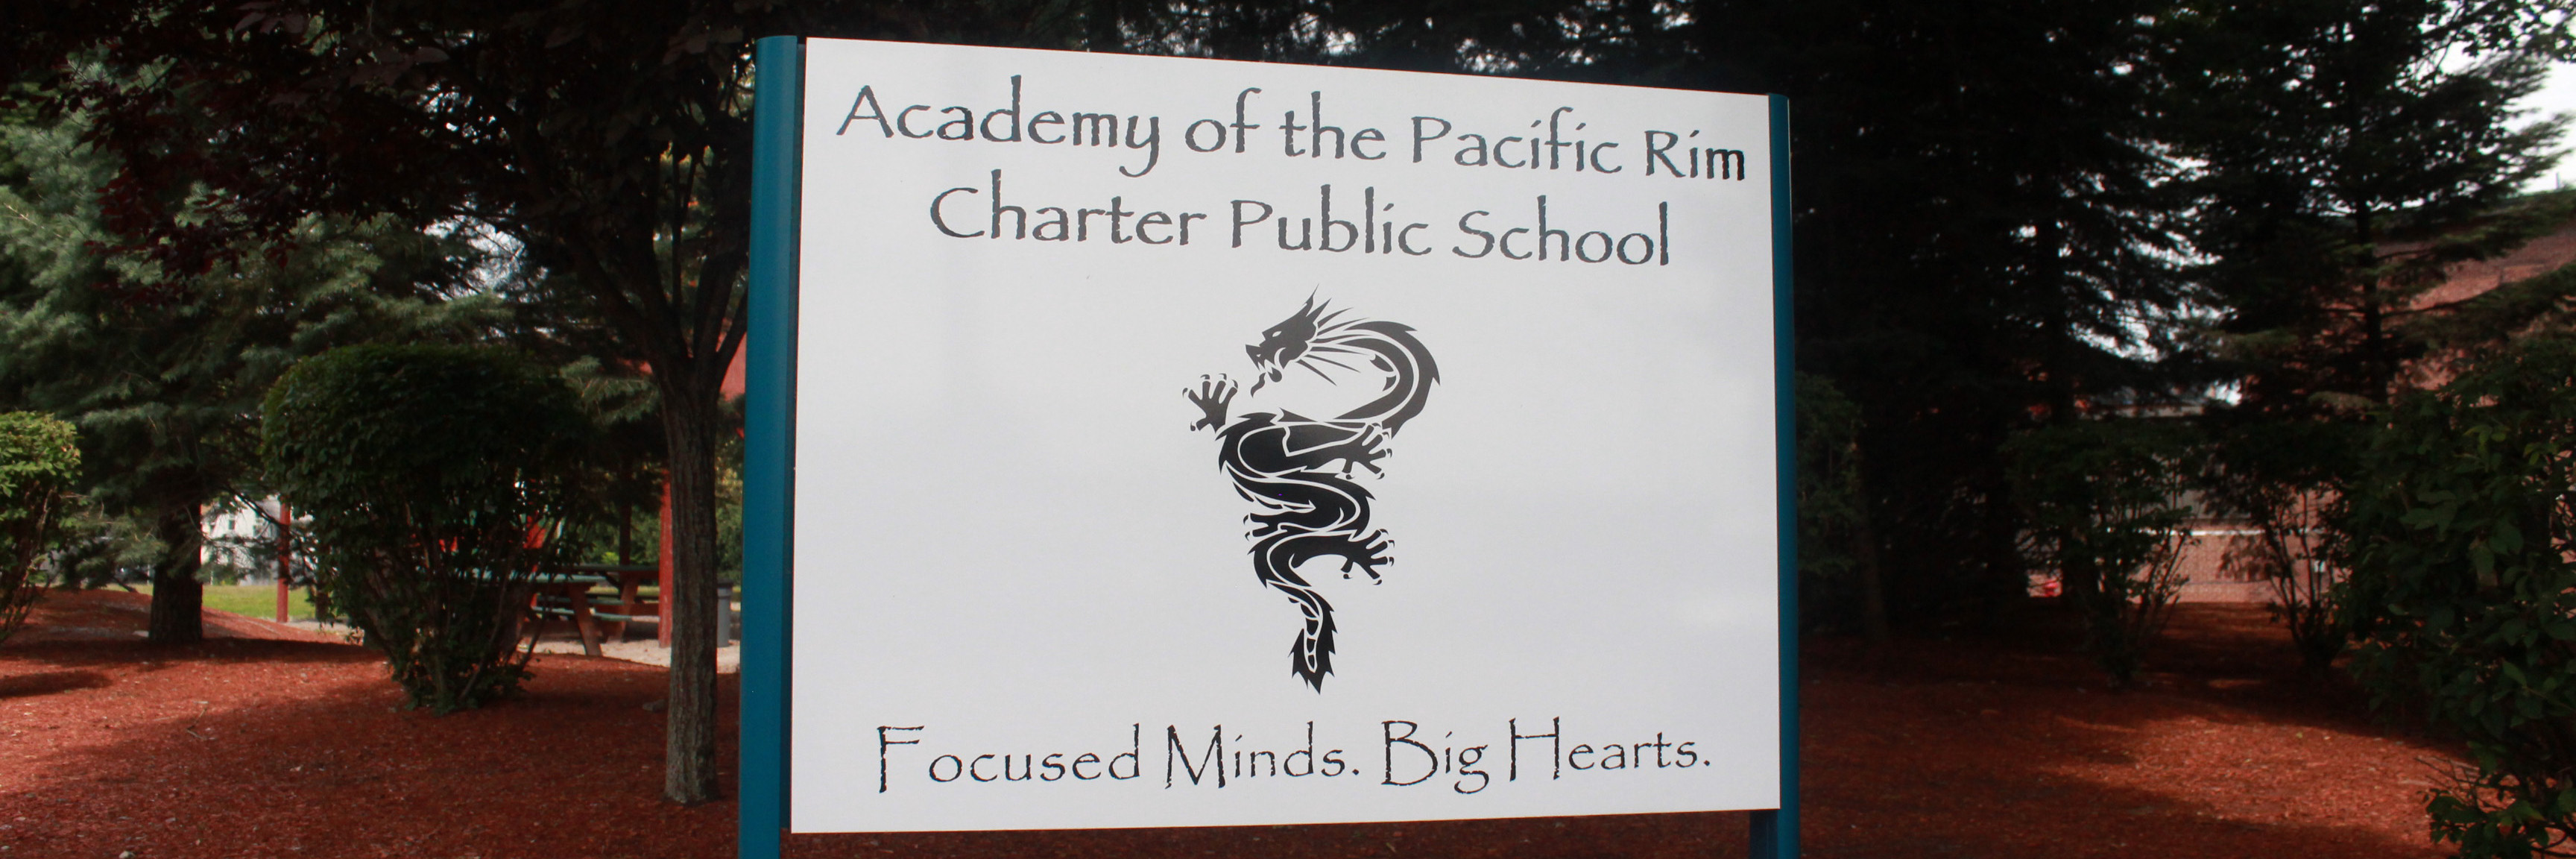 Academy Of The Pacific Rim Charter Public School Boston School Finder